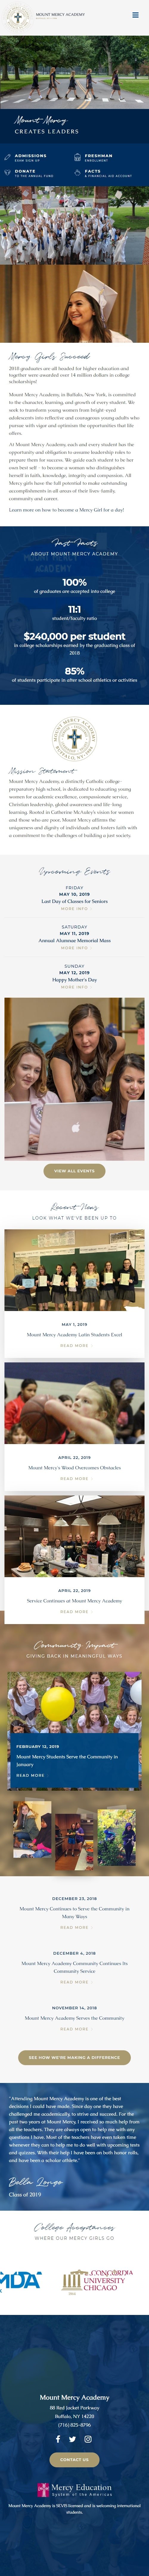 Mount Mercy Academy Mobile